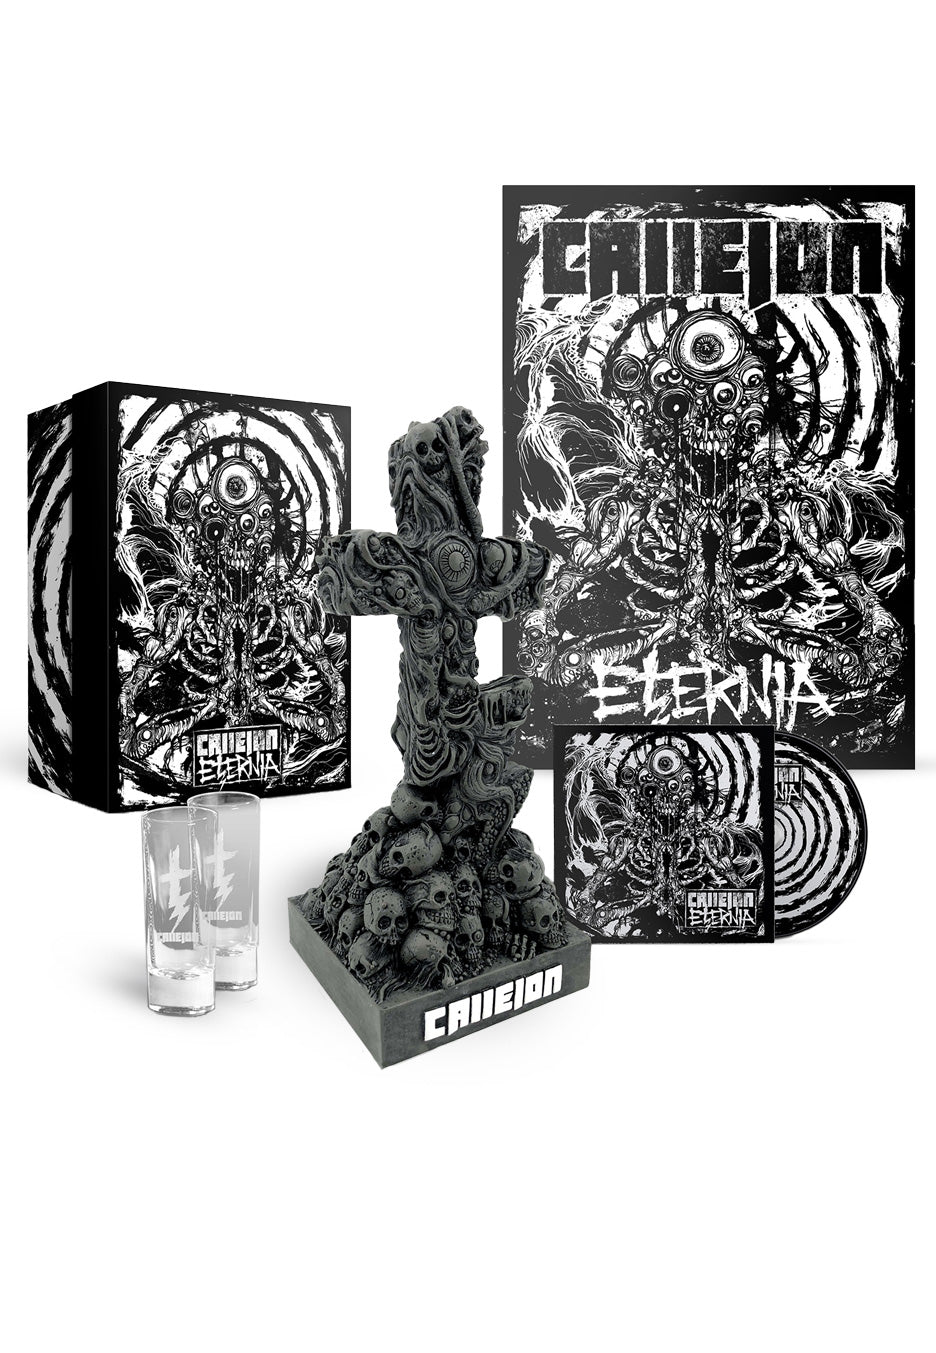 Callejon - Eternia Deluxe - Box | Neutral-Image